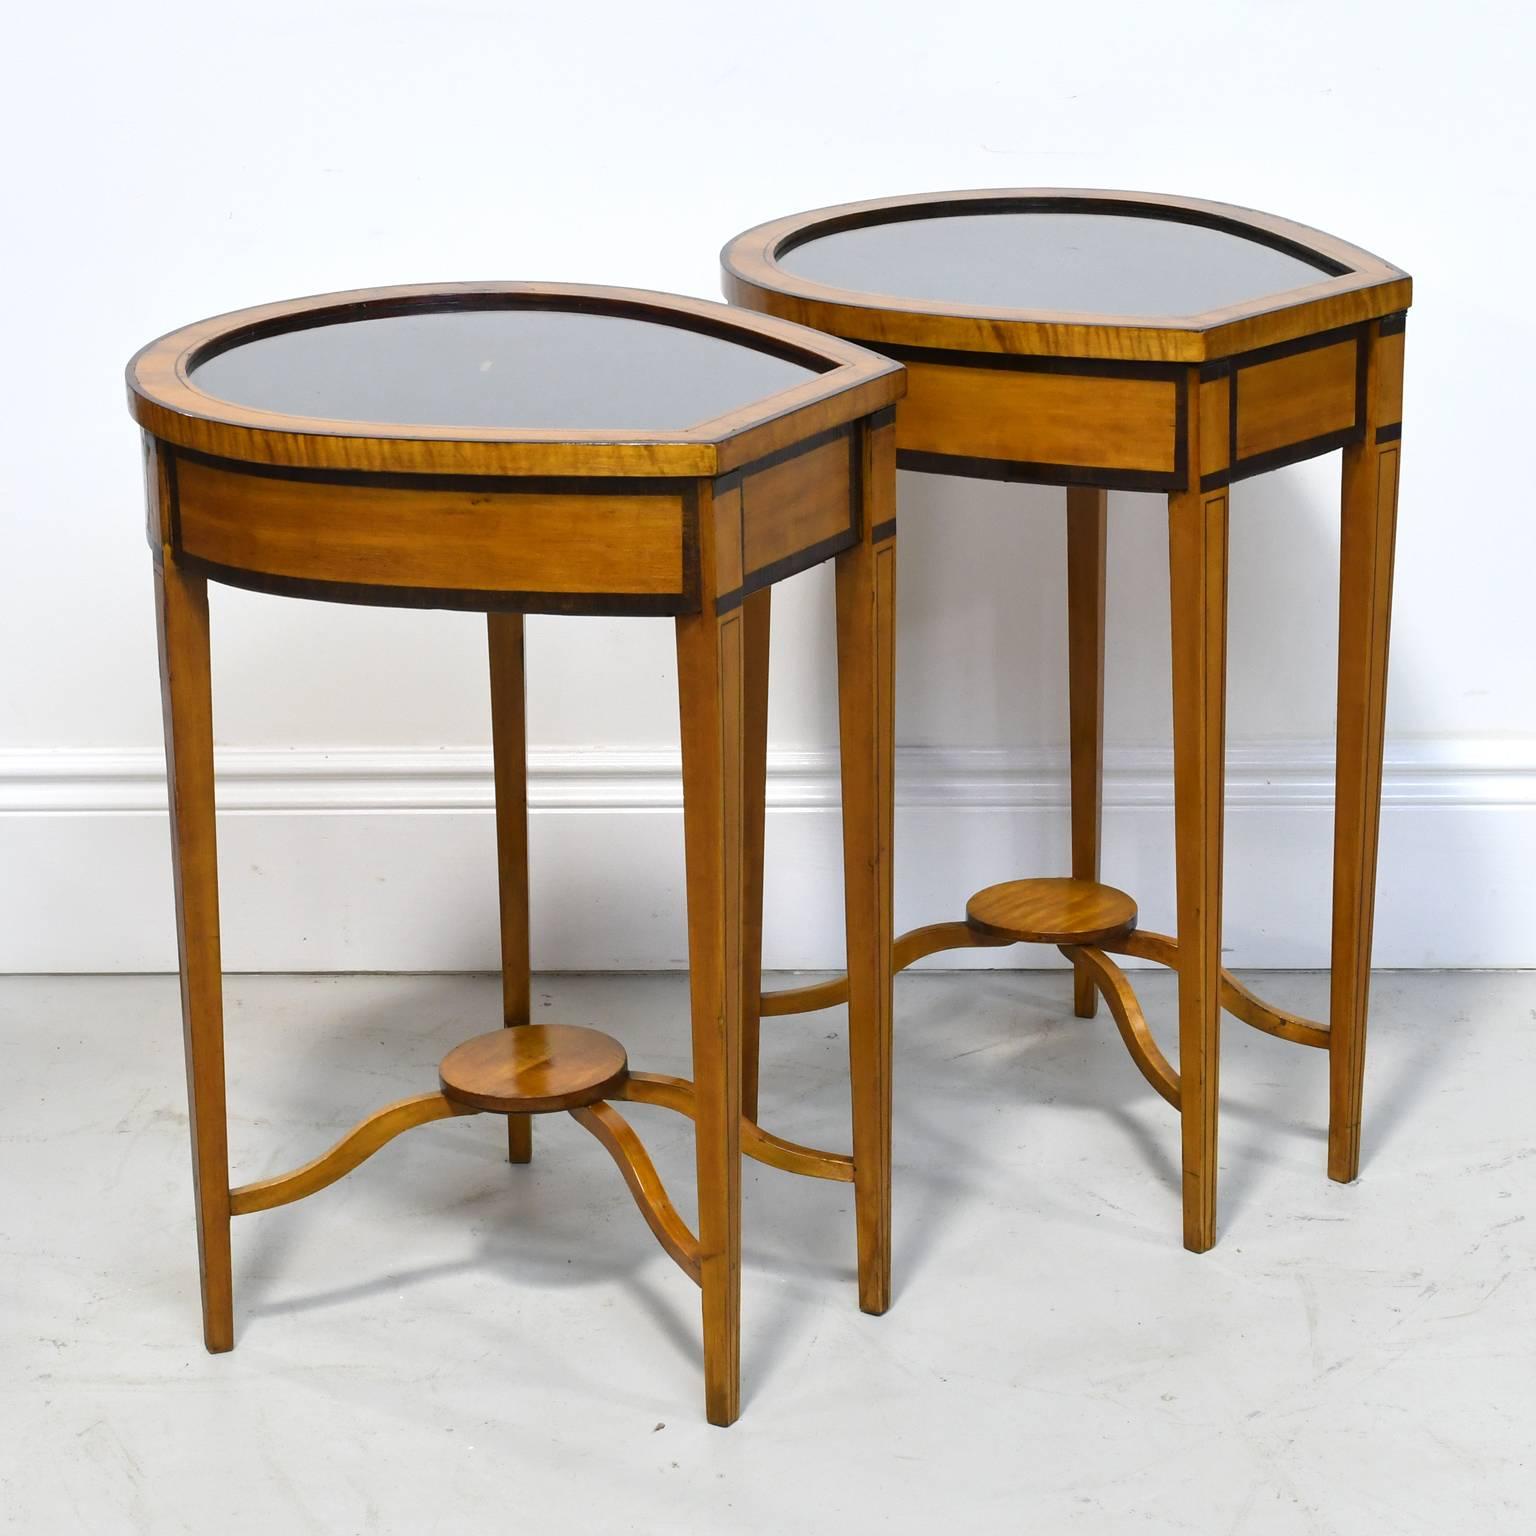 Pair of Edwardian Satinwood, Parcel-Ebonized Curio Tables, circa 1900 For Sale 2